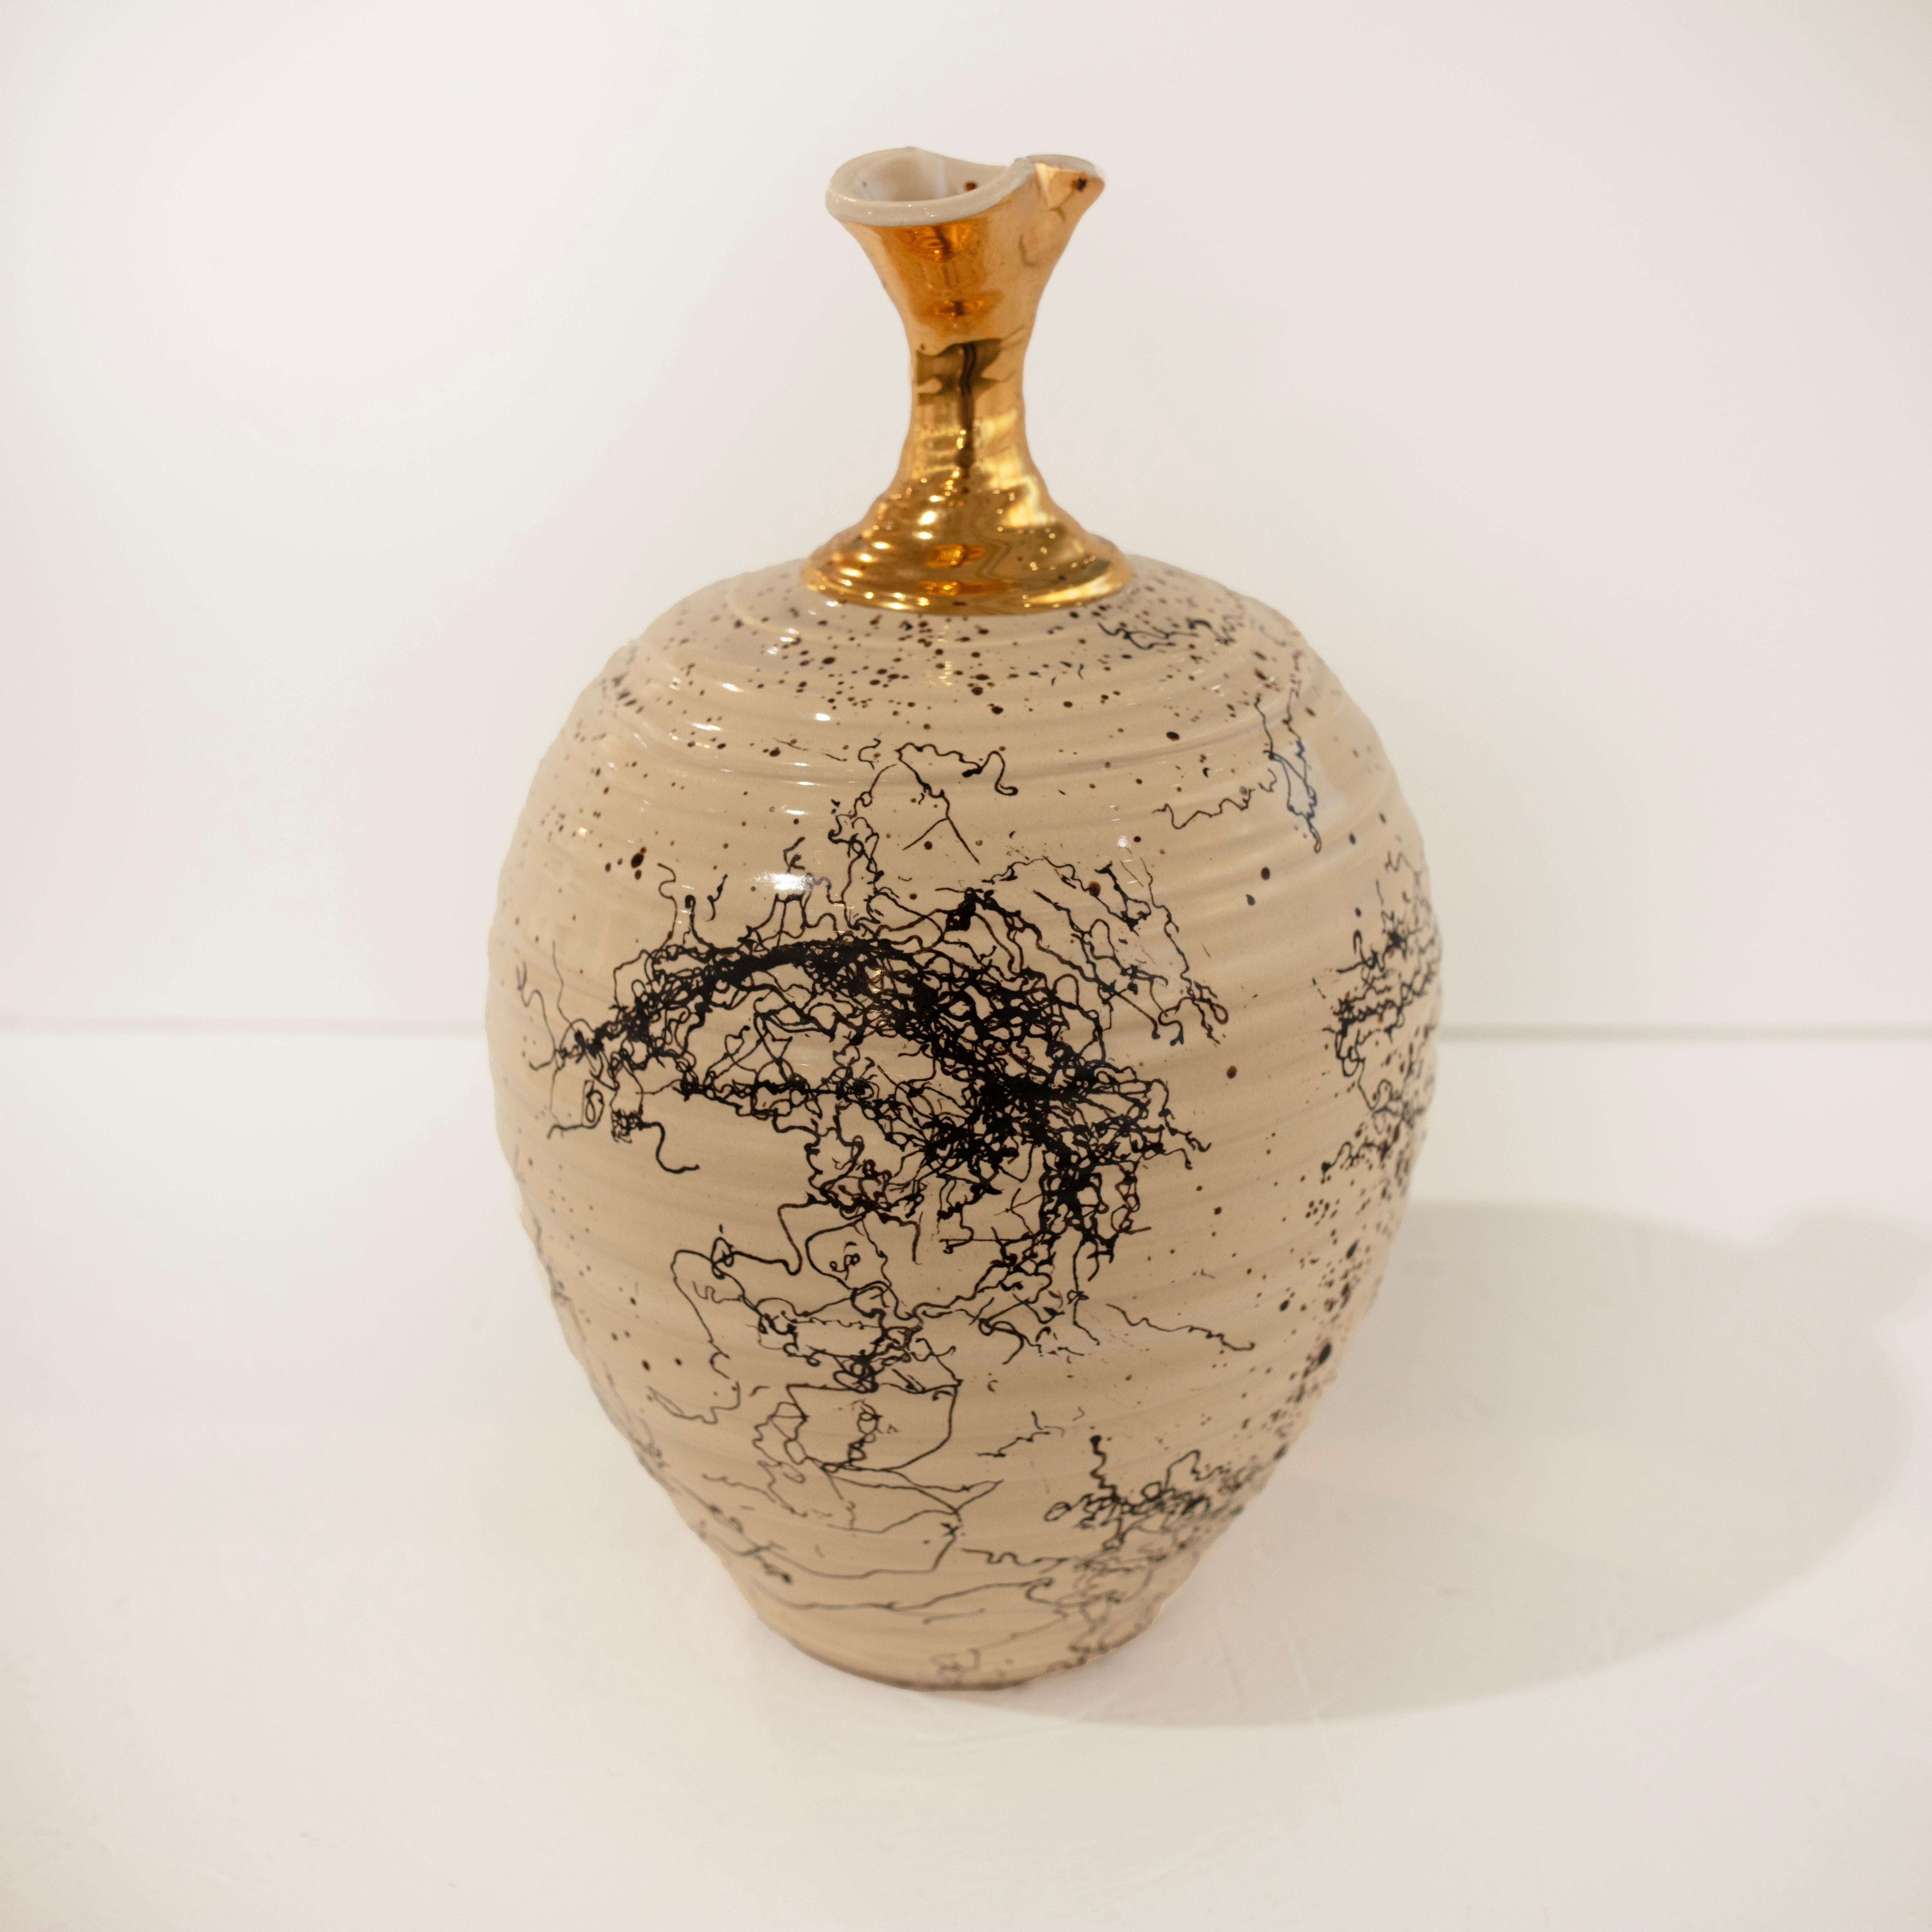 Jon Puzzuoli Abstract Sculpture - Cream Colored Ceramic Vase